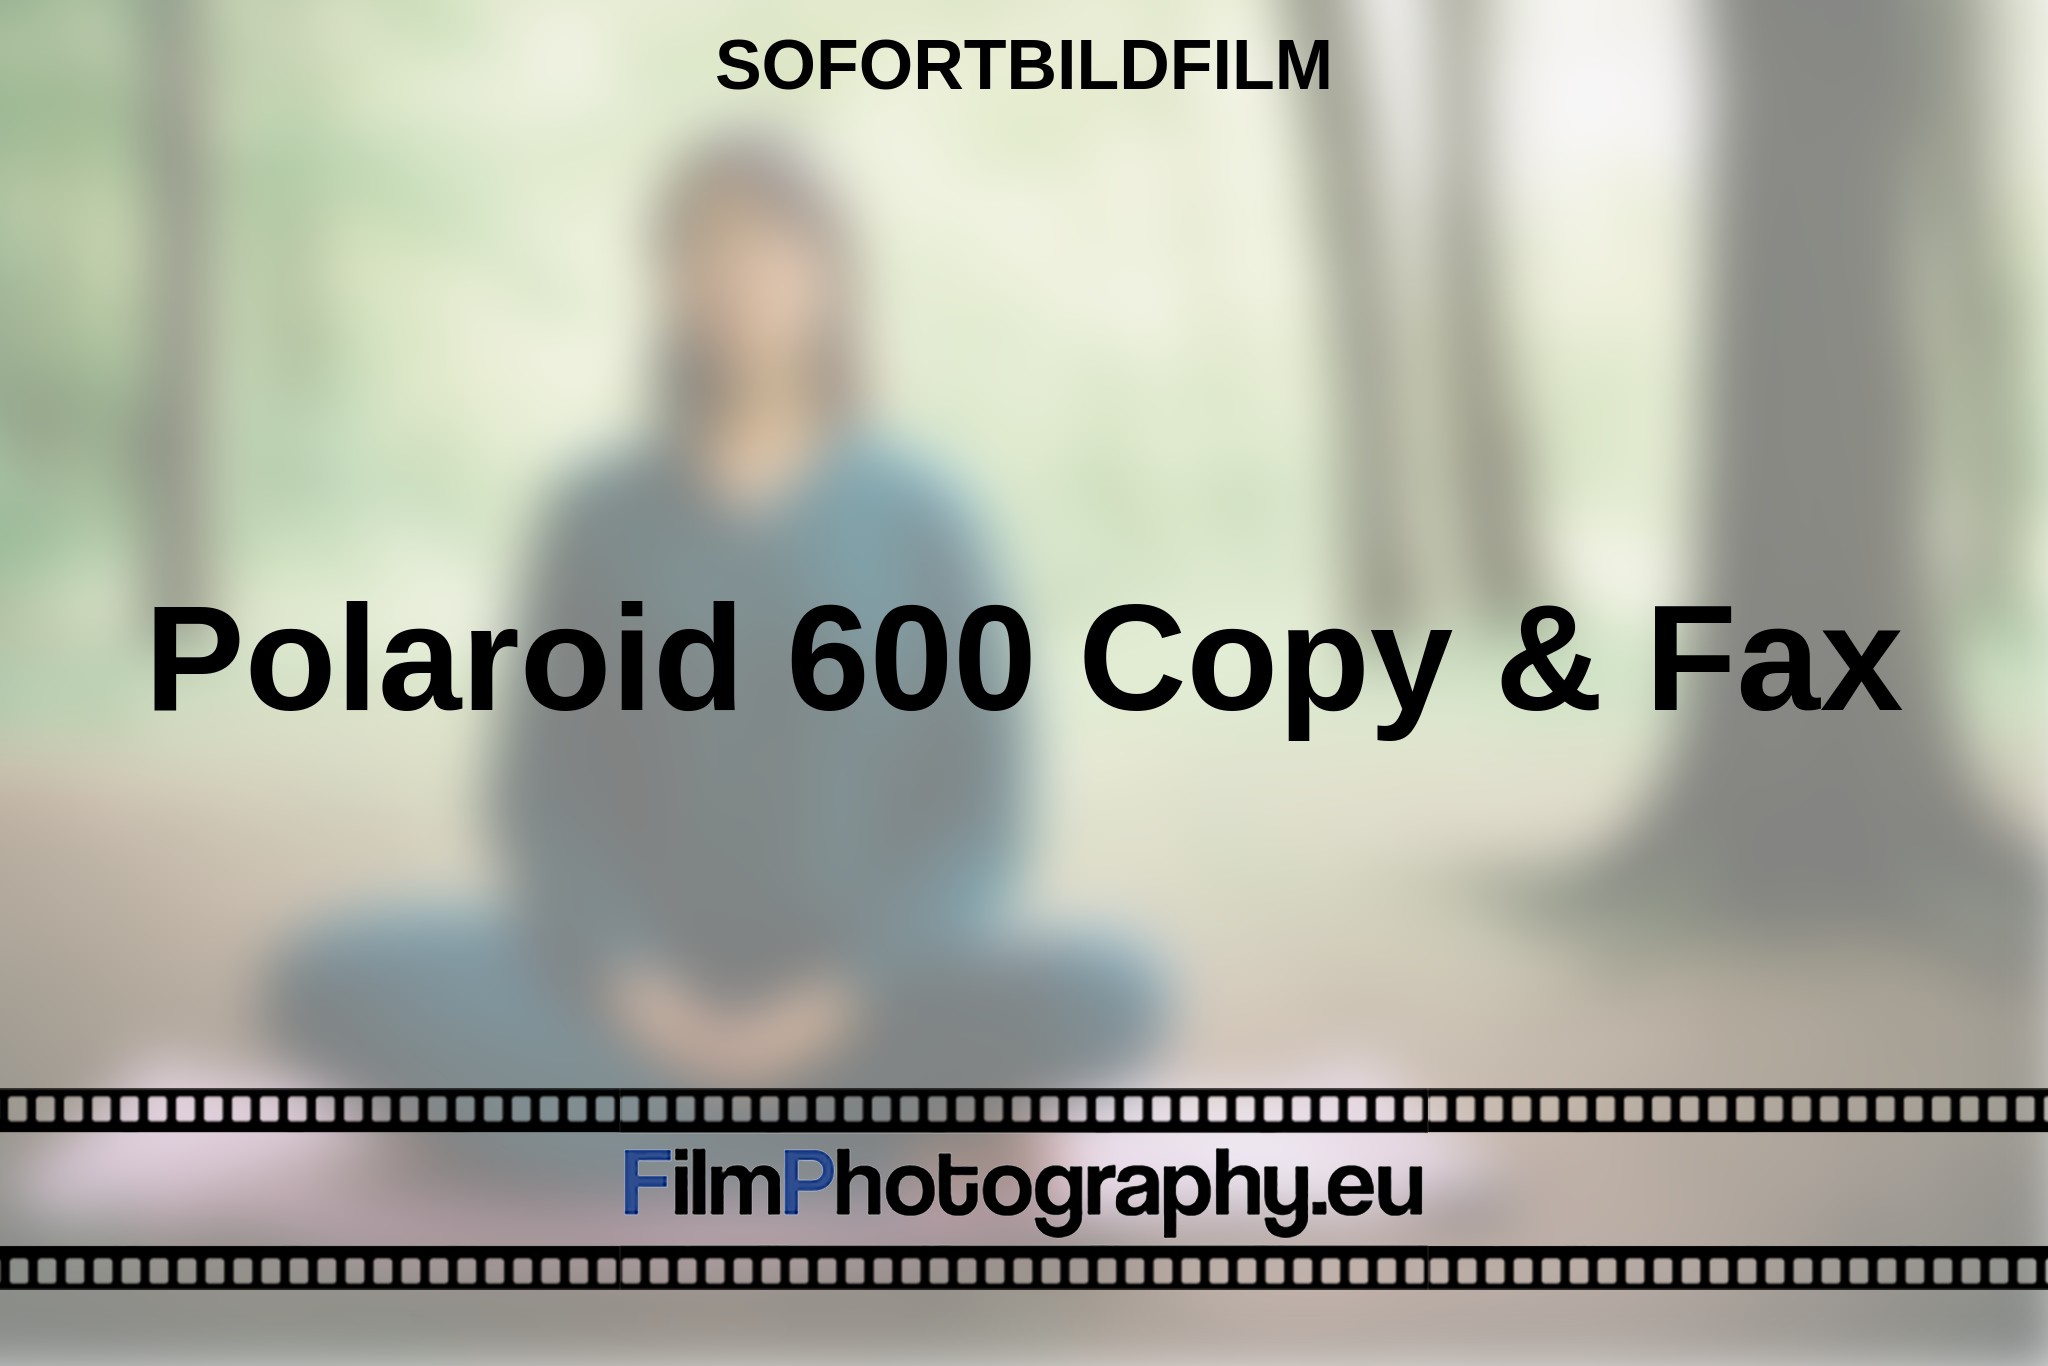 polaroid-600-copy-fax-sofortbildfilm-bnv.jpg